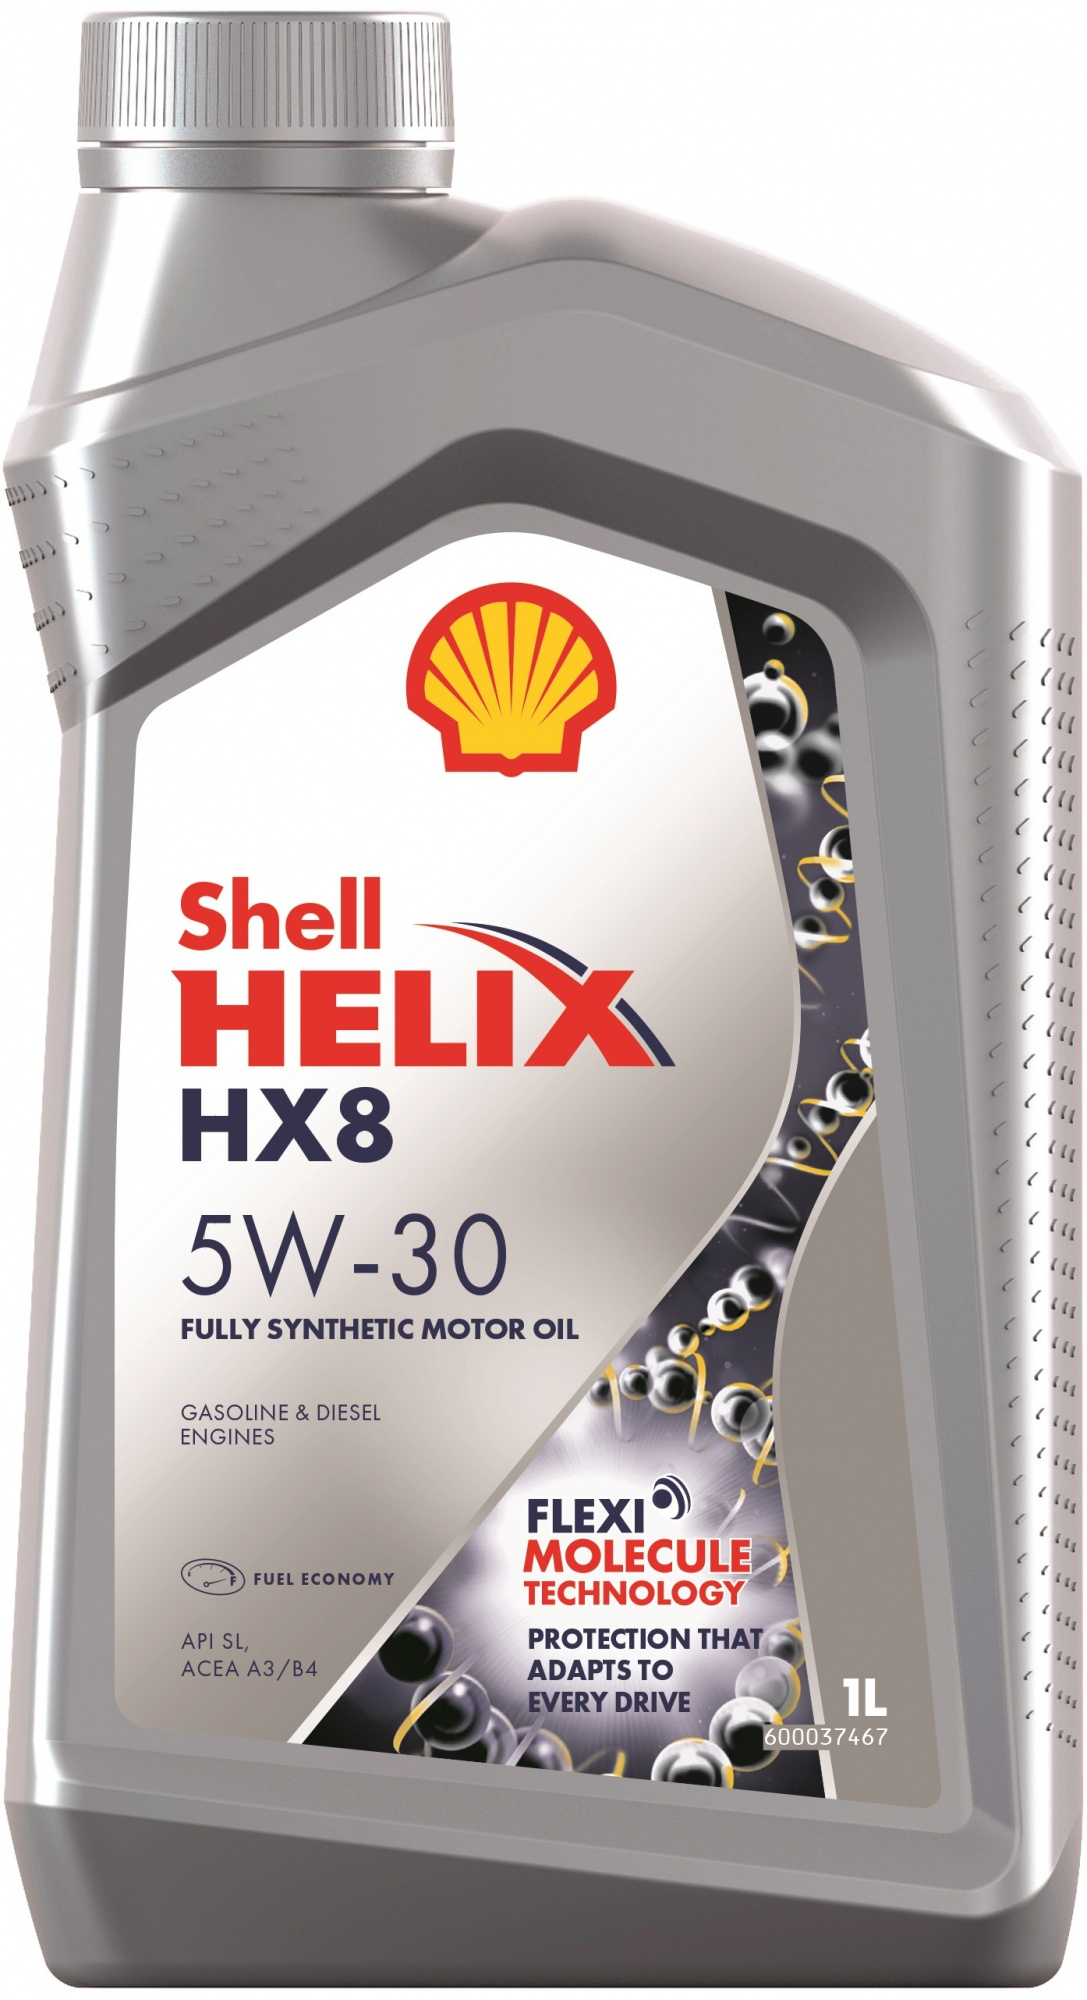 Моторное масло Shell Helix HX8 5W-30, 550046372, 1л